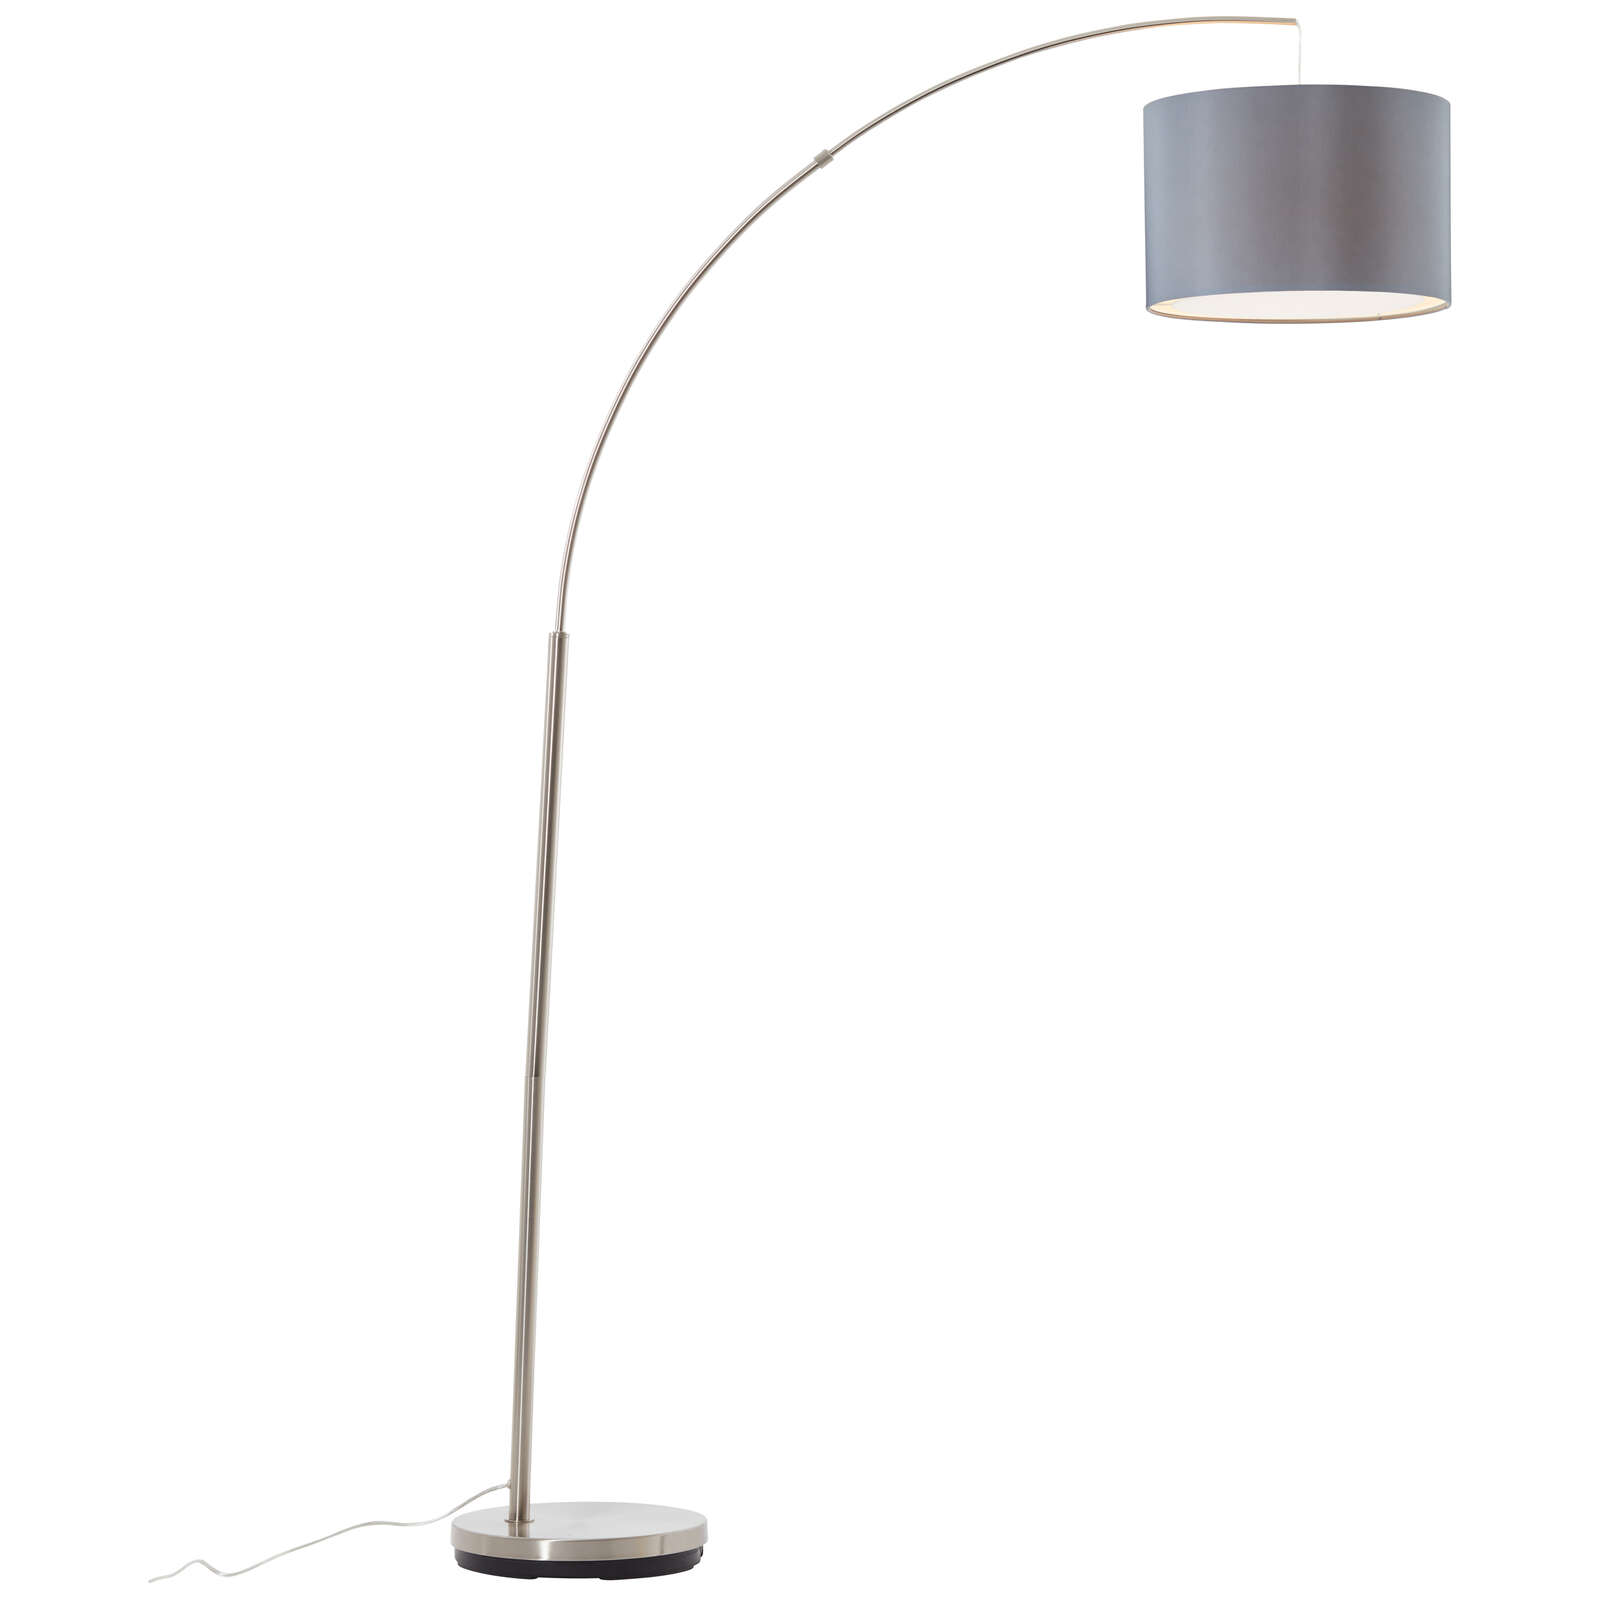             Arched textile floor lamp - Elise 2 - Grey
        